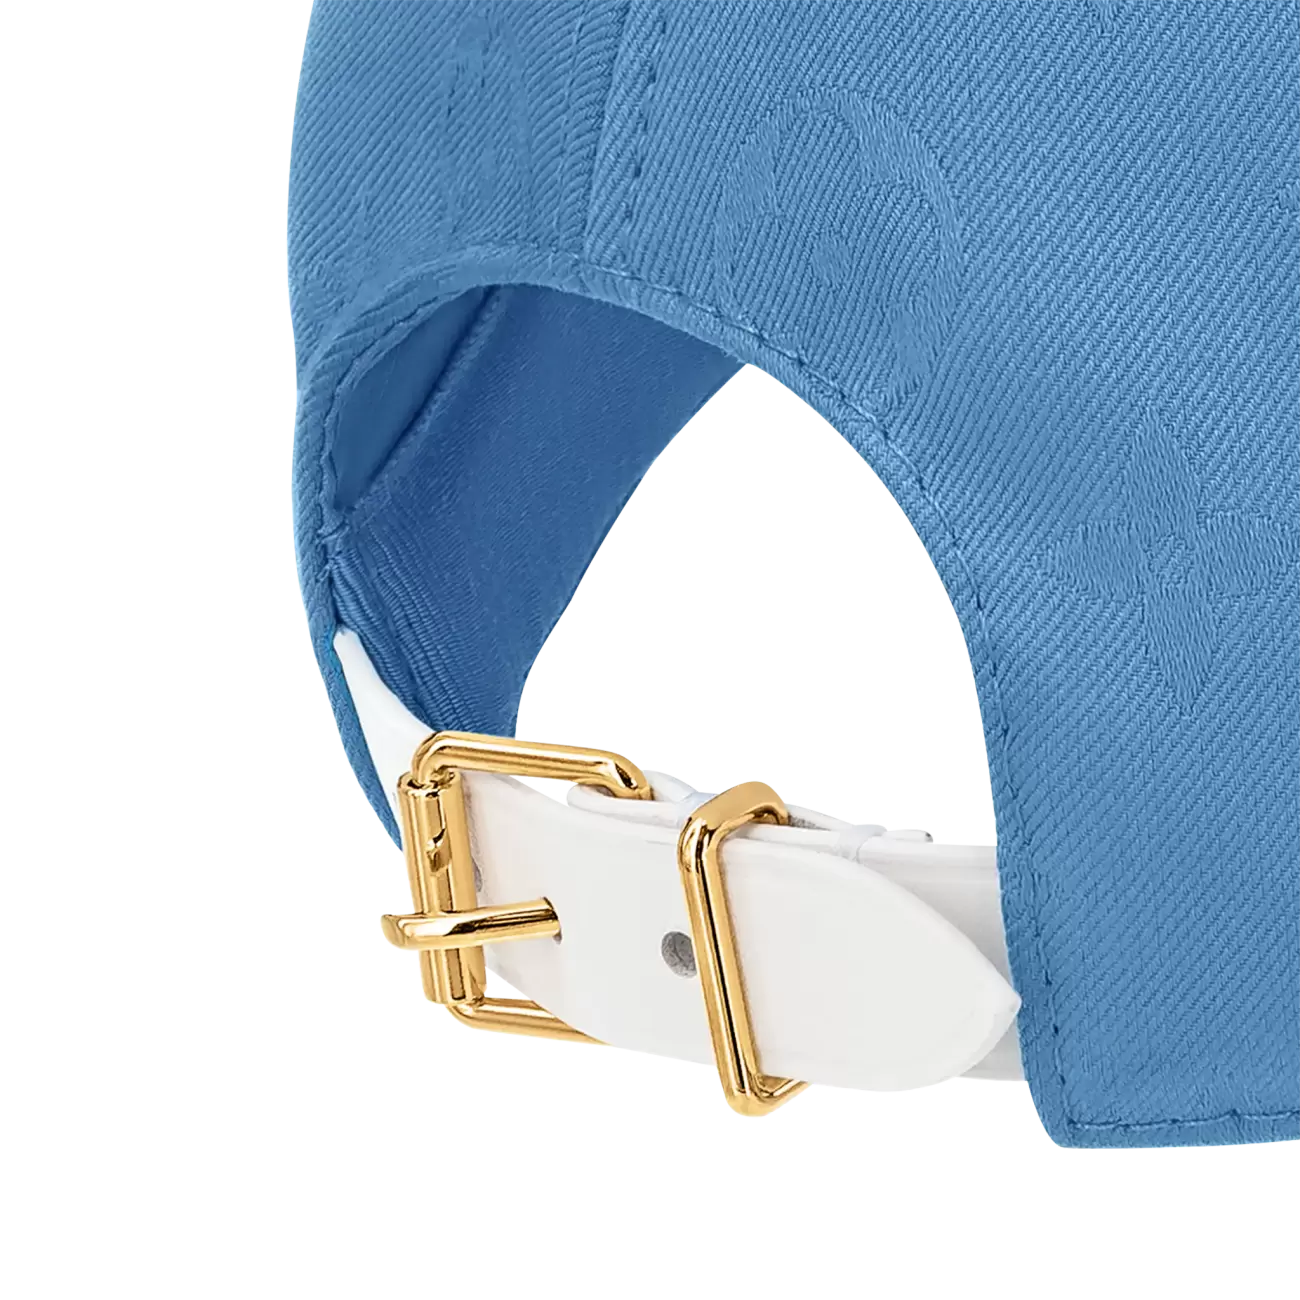 Monogram Jacquard Denim Bucket Hat S00 - Accessories